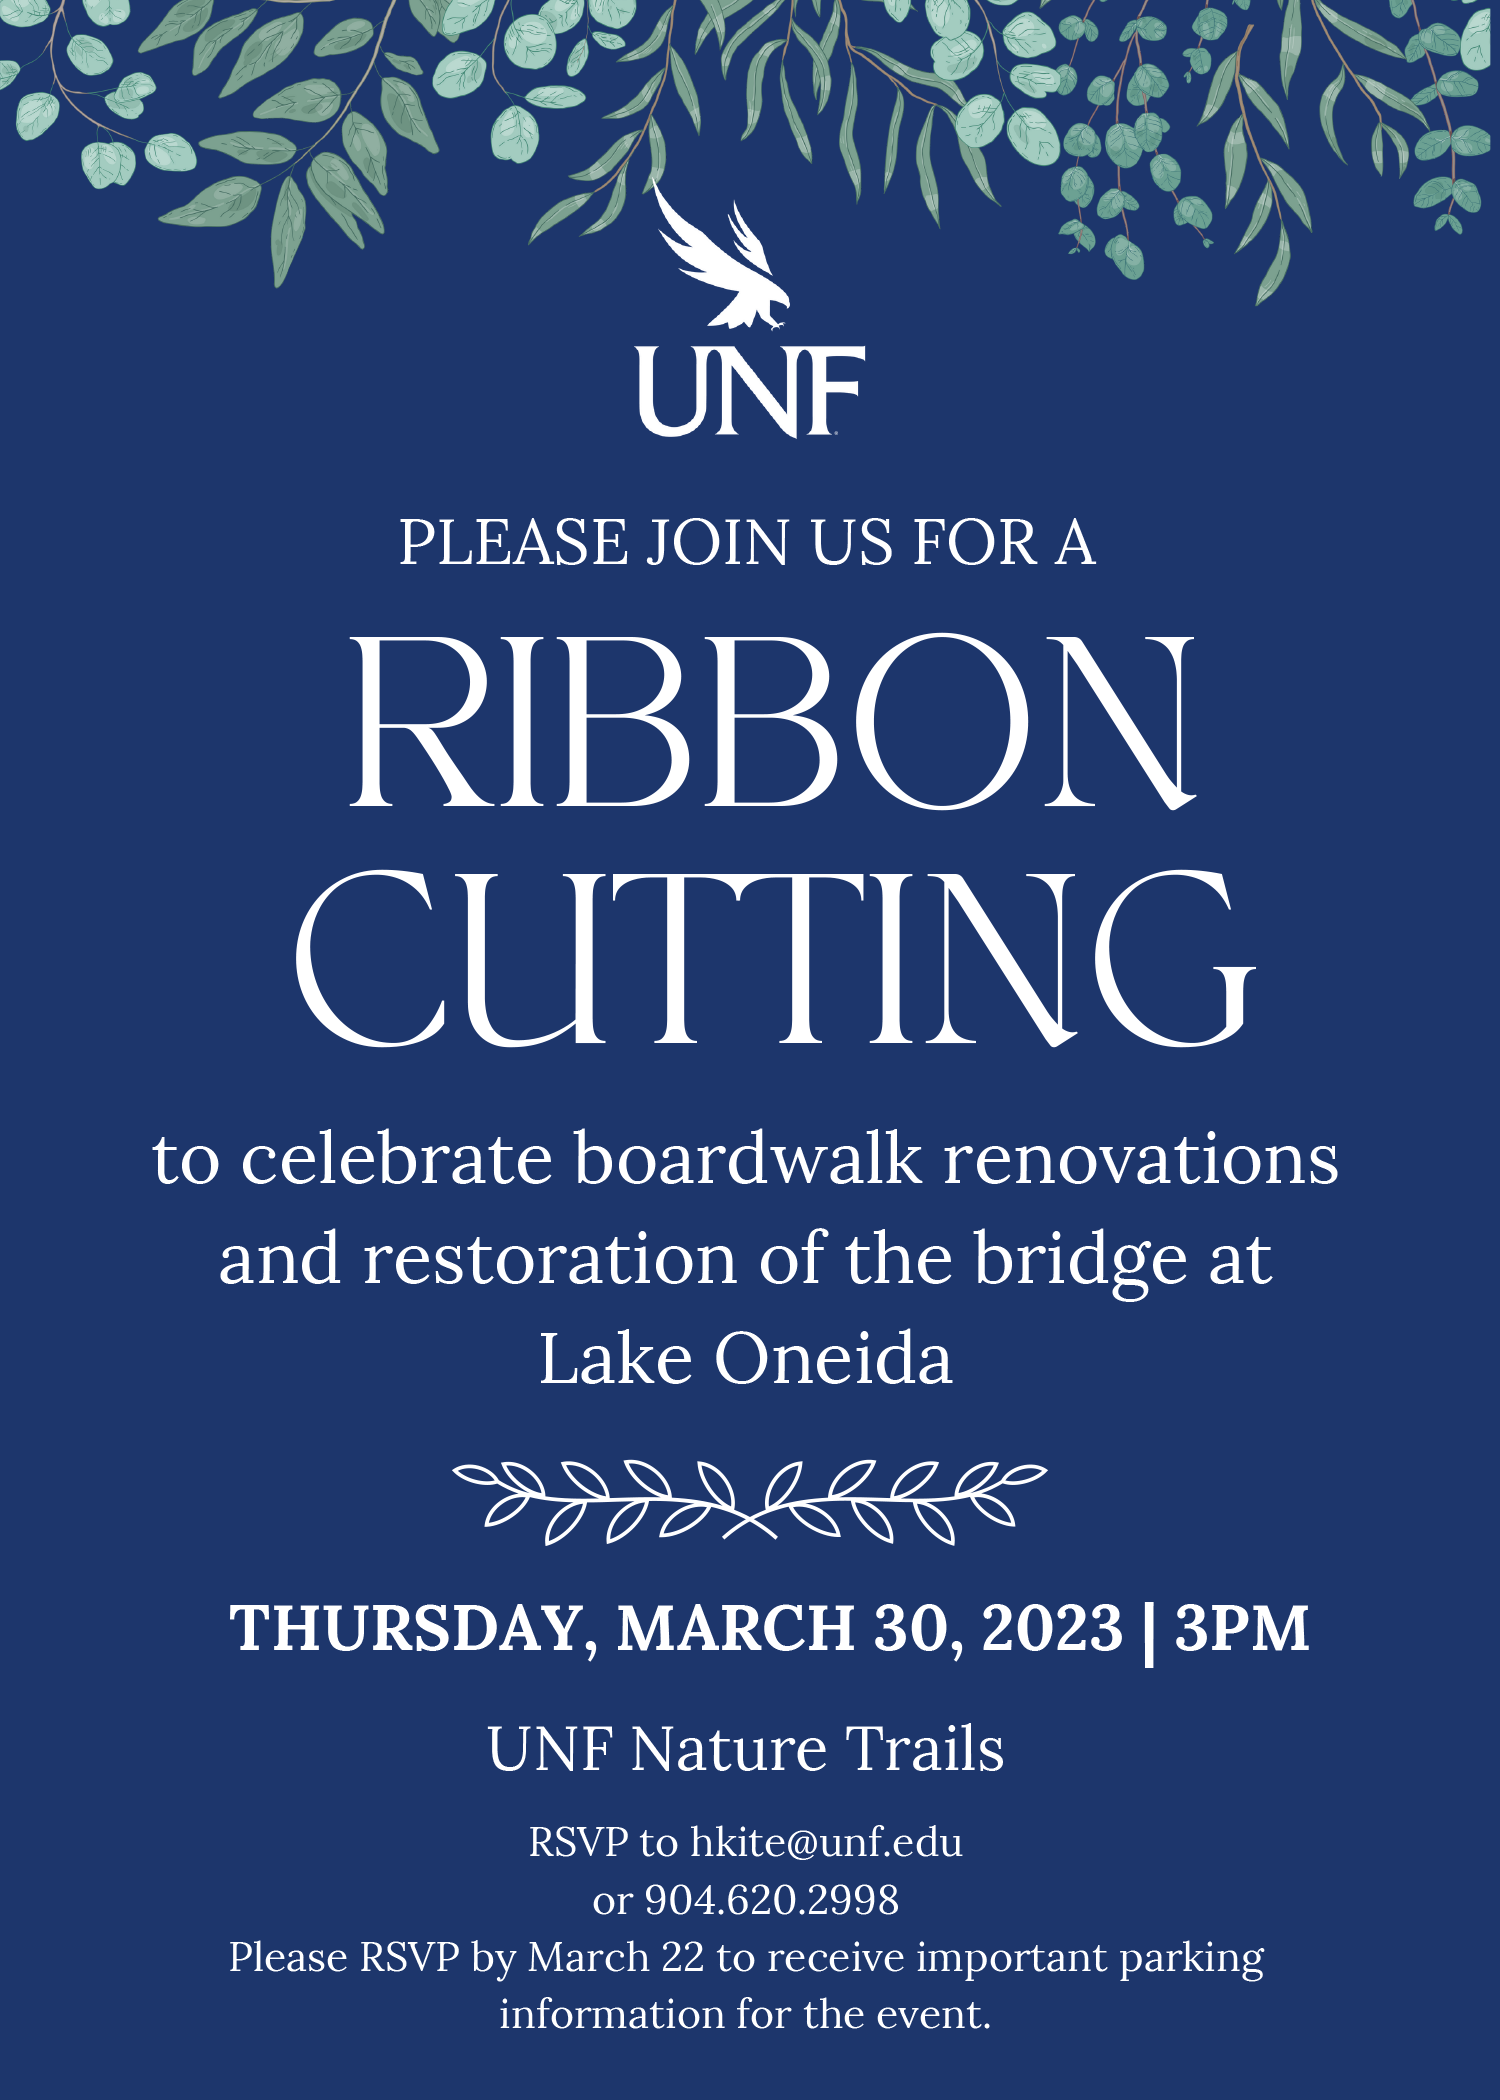 Ribbon Cutting Invitation, long description available below image. 